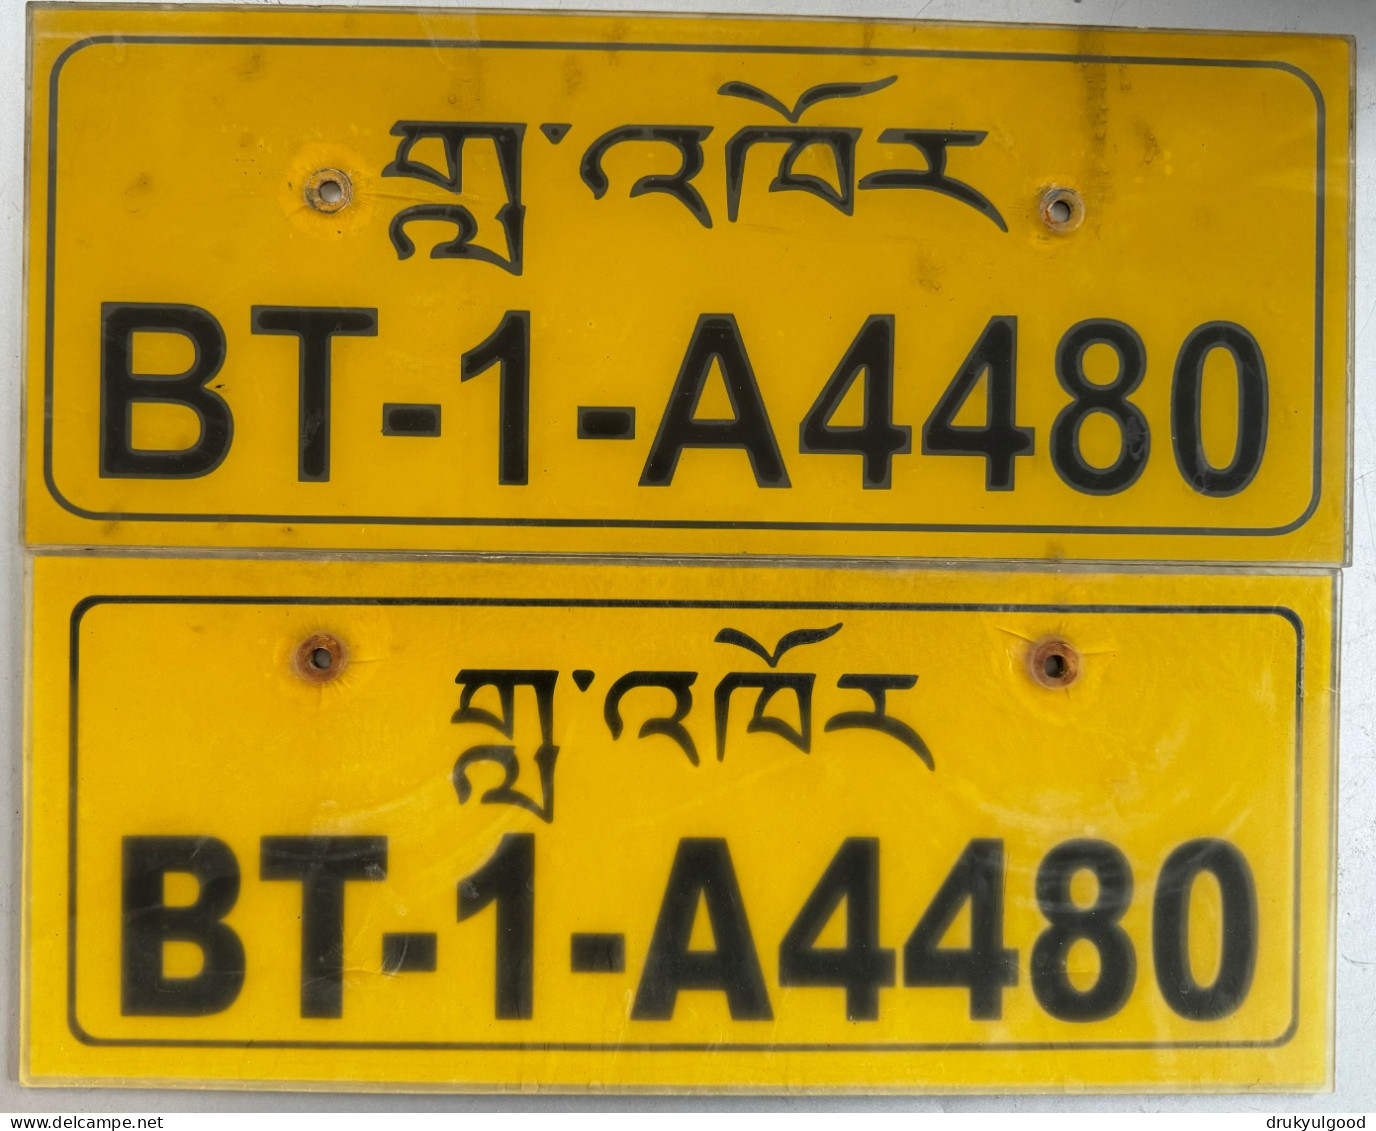 BHUTAN Western Region Taxi Plate On Plastic Pair BT-1-A4480 - Number Plates